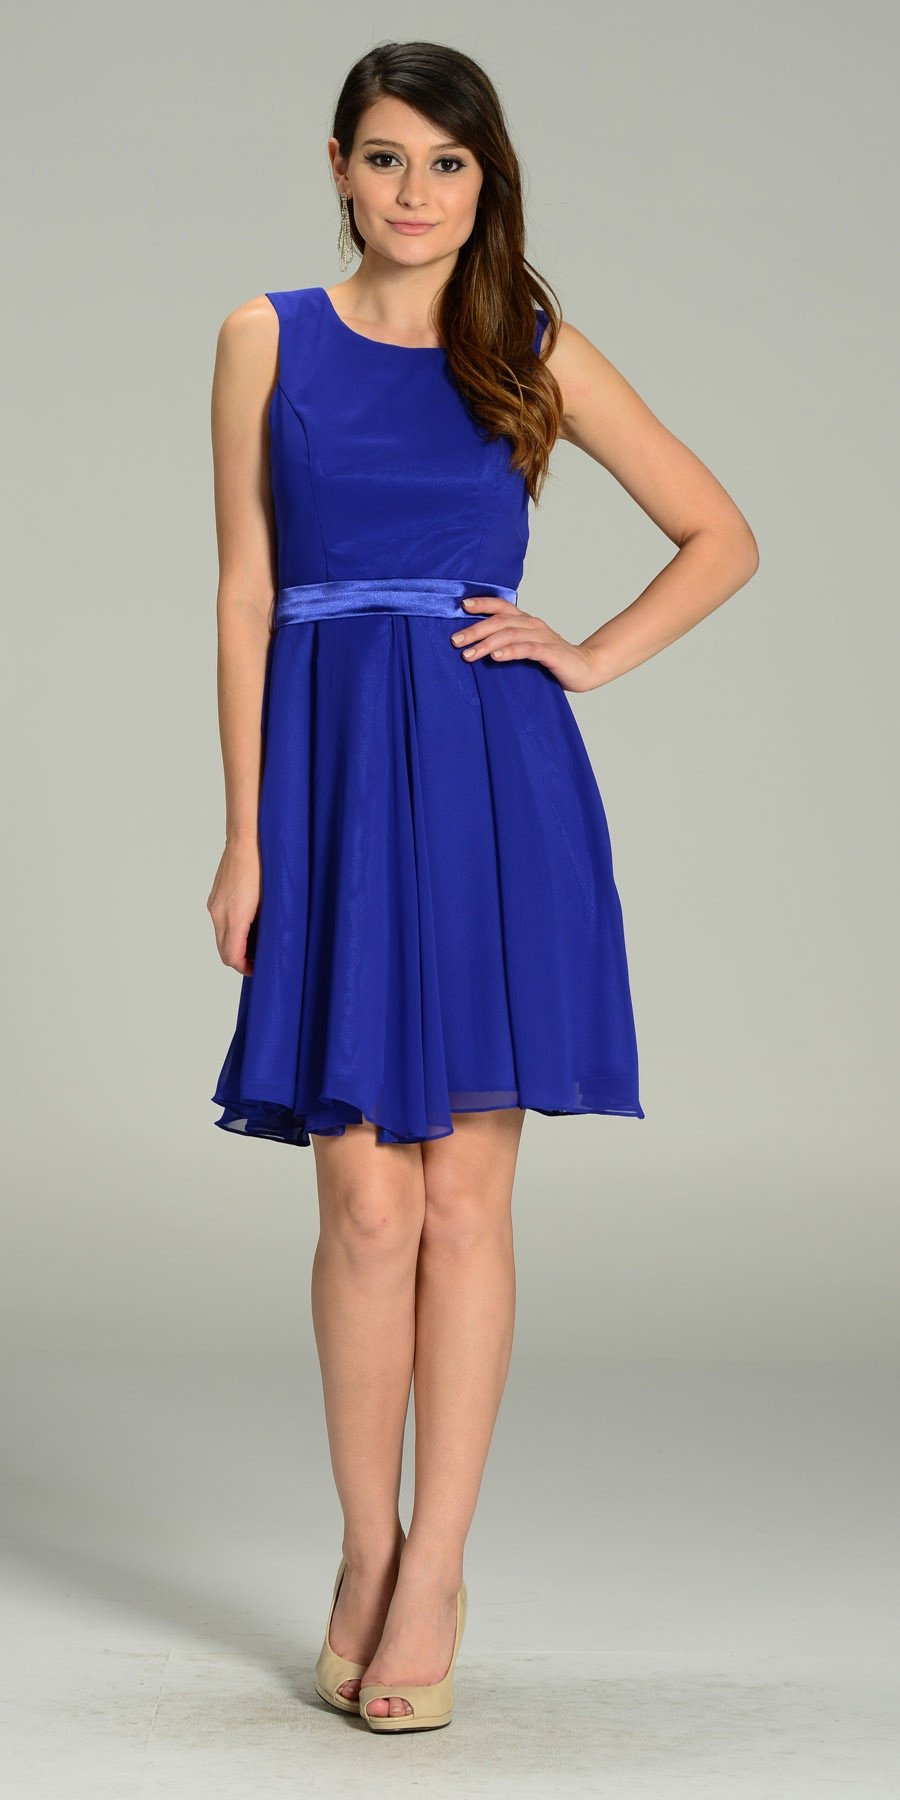 royal blue dress semi formal